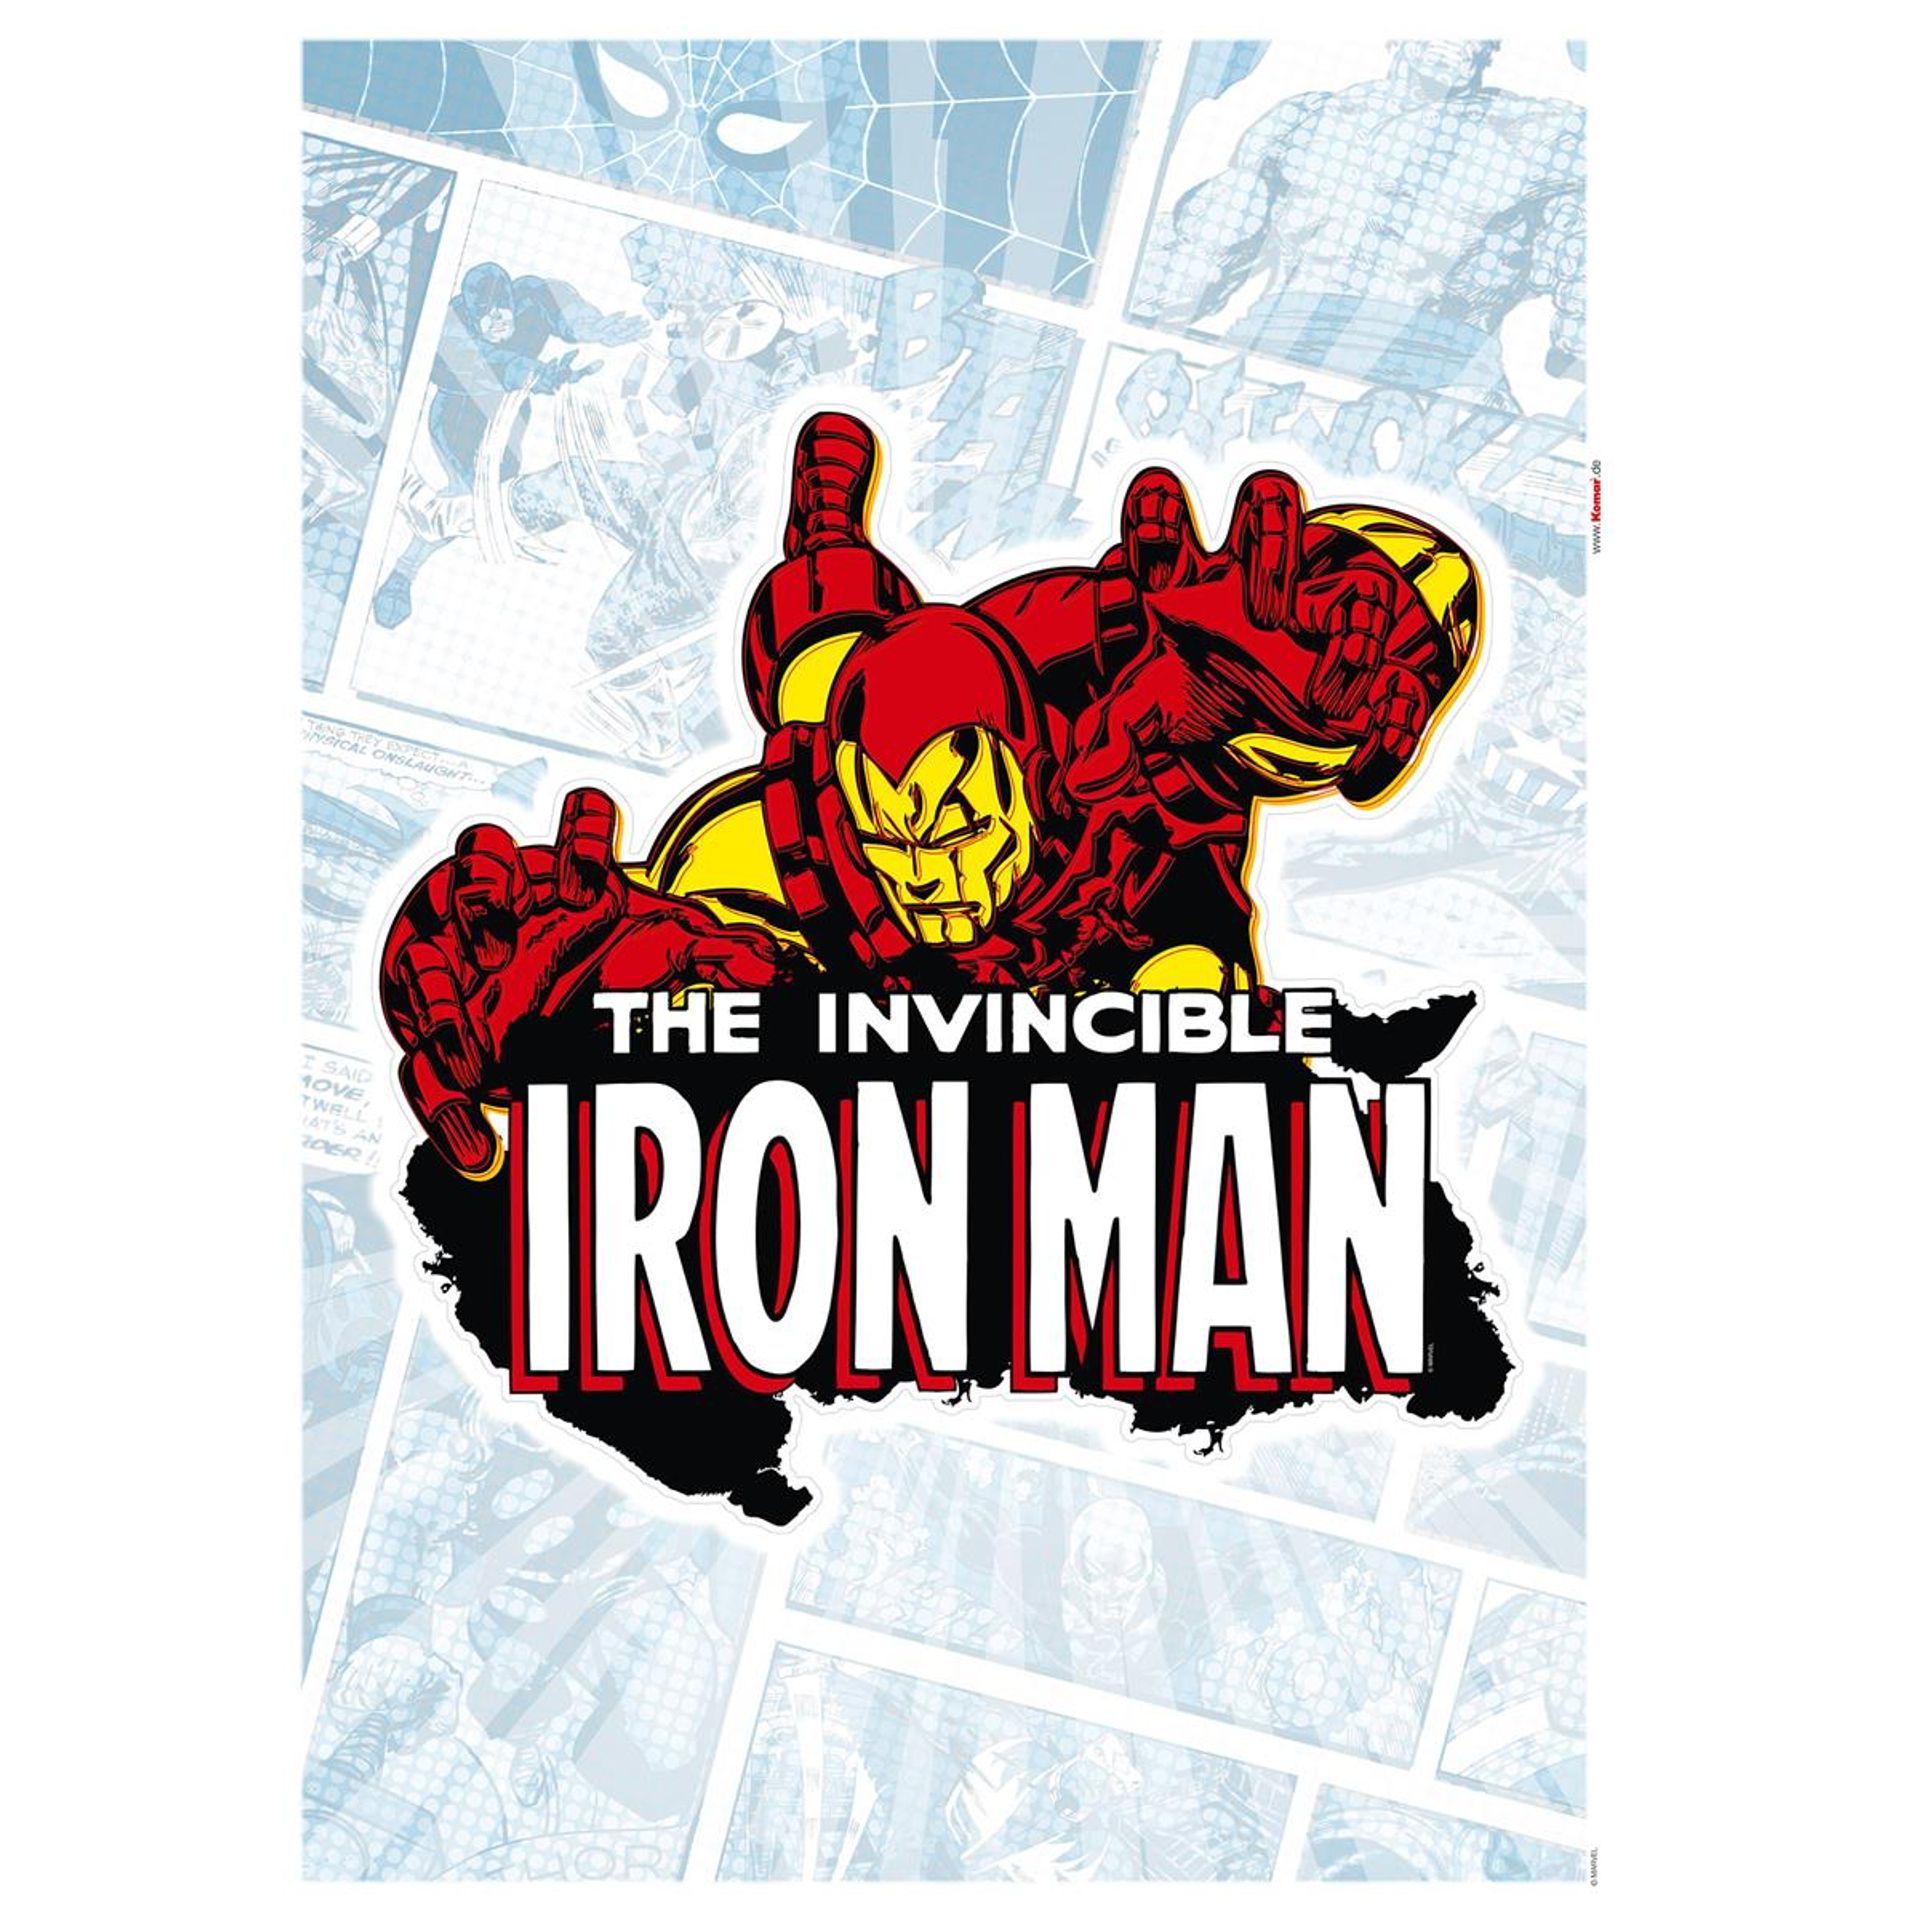 Wandtattoo - Iron Man Comic Classic  - Größe 50 x 70 cm